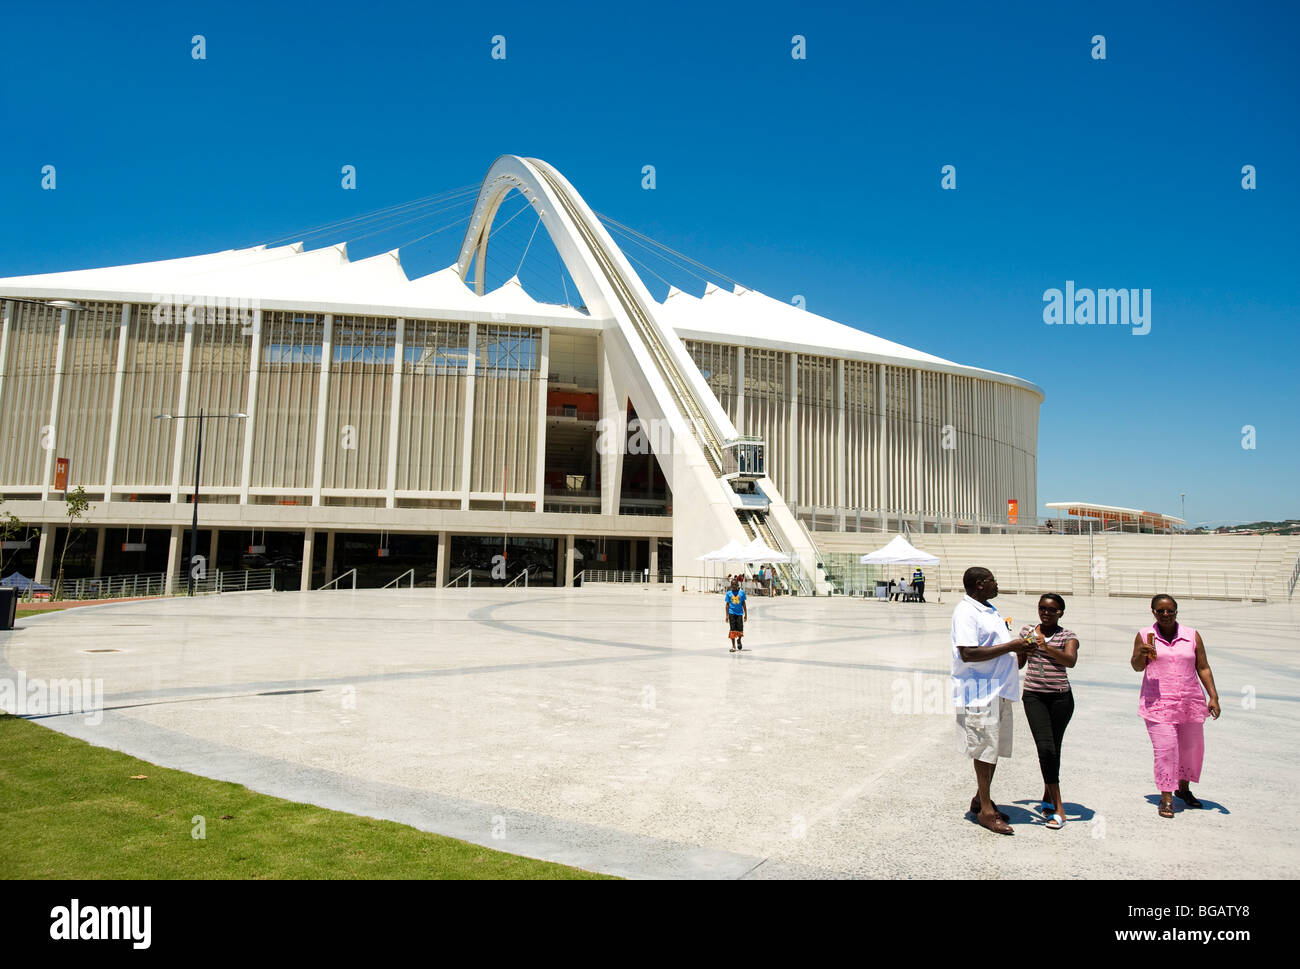 The Durban Moses Mabhida Soccer Stadium. Durban, South Africa Stock Photo